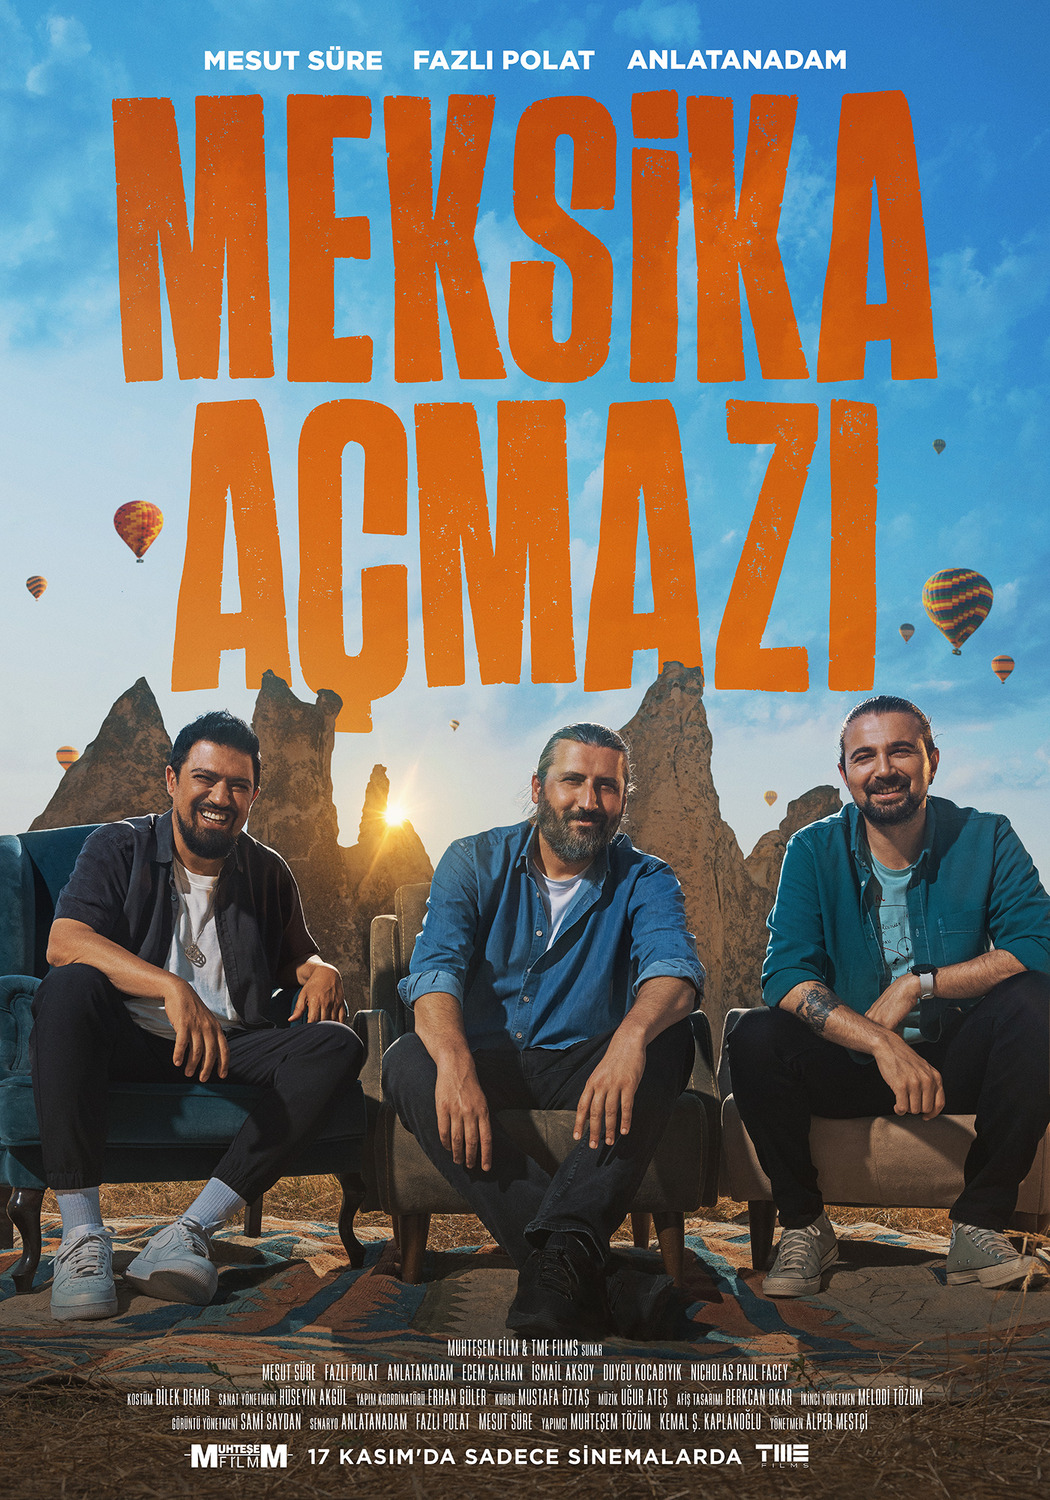 Extra Large Movie Poster Image for Meksika Açmazi (#3 of 6)